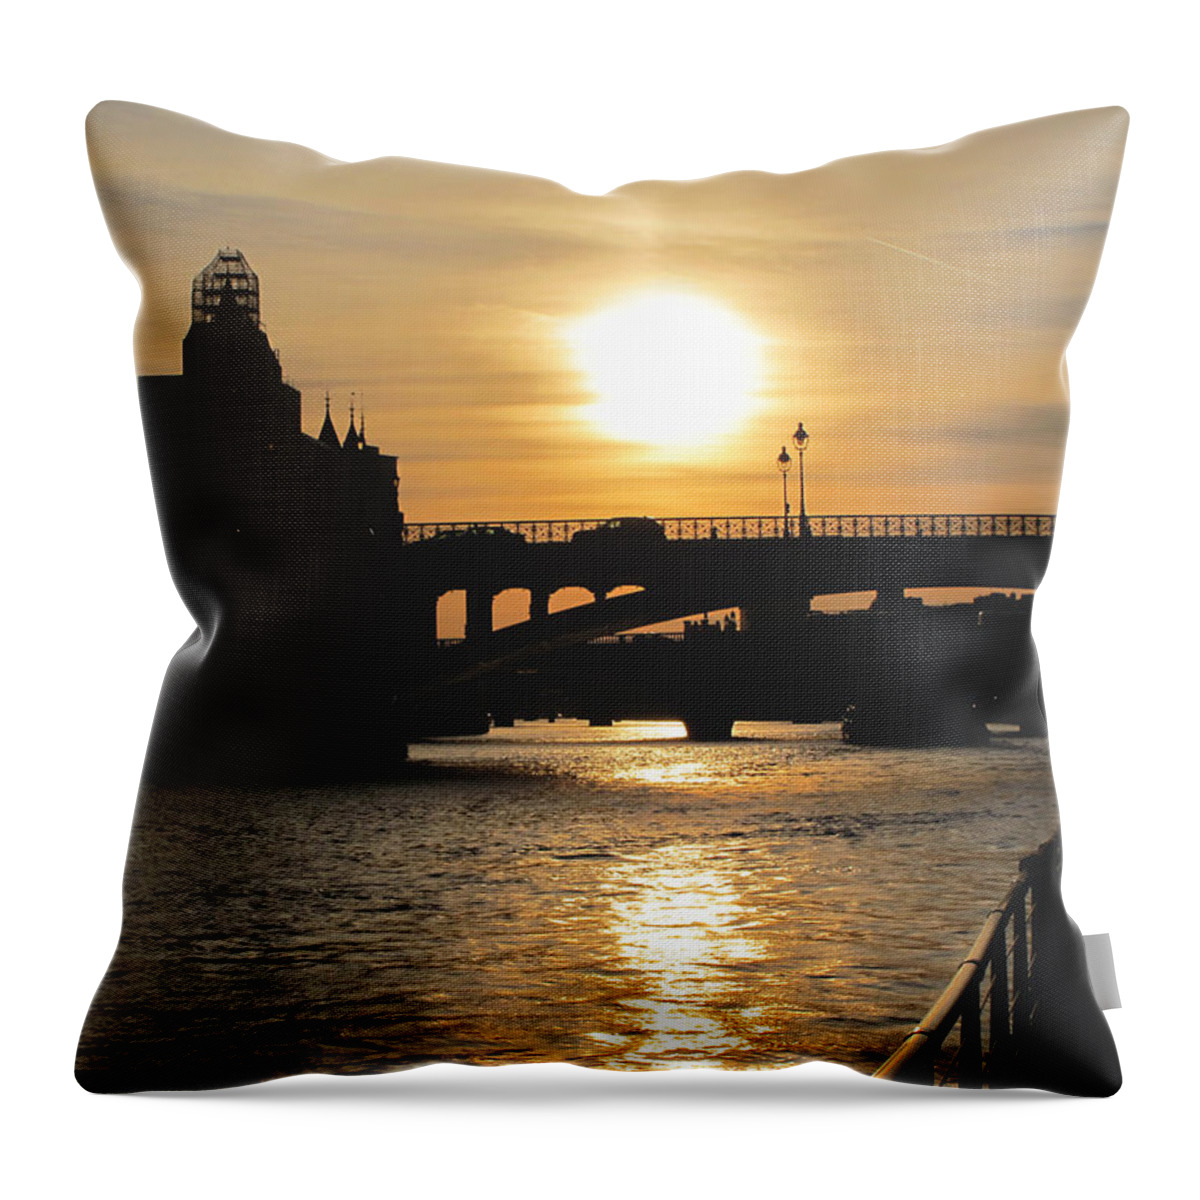 Paris Throw Pillow featuring the photograph Parisian Sunset by Kathy Corday